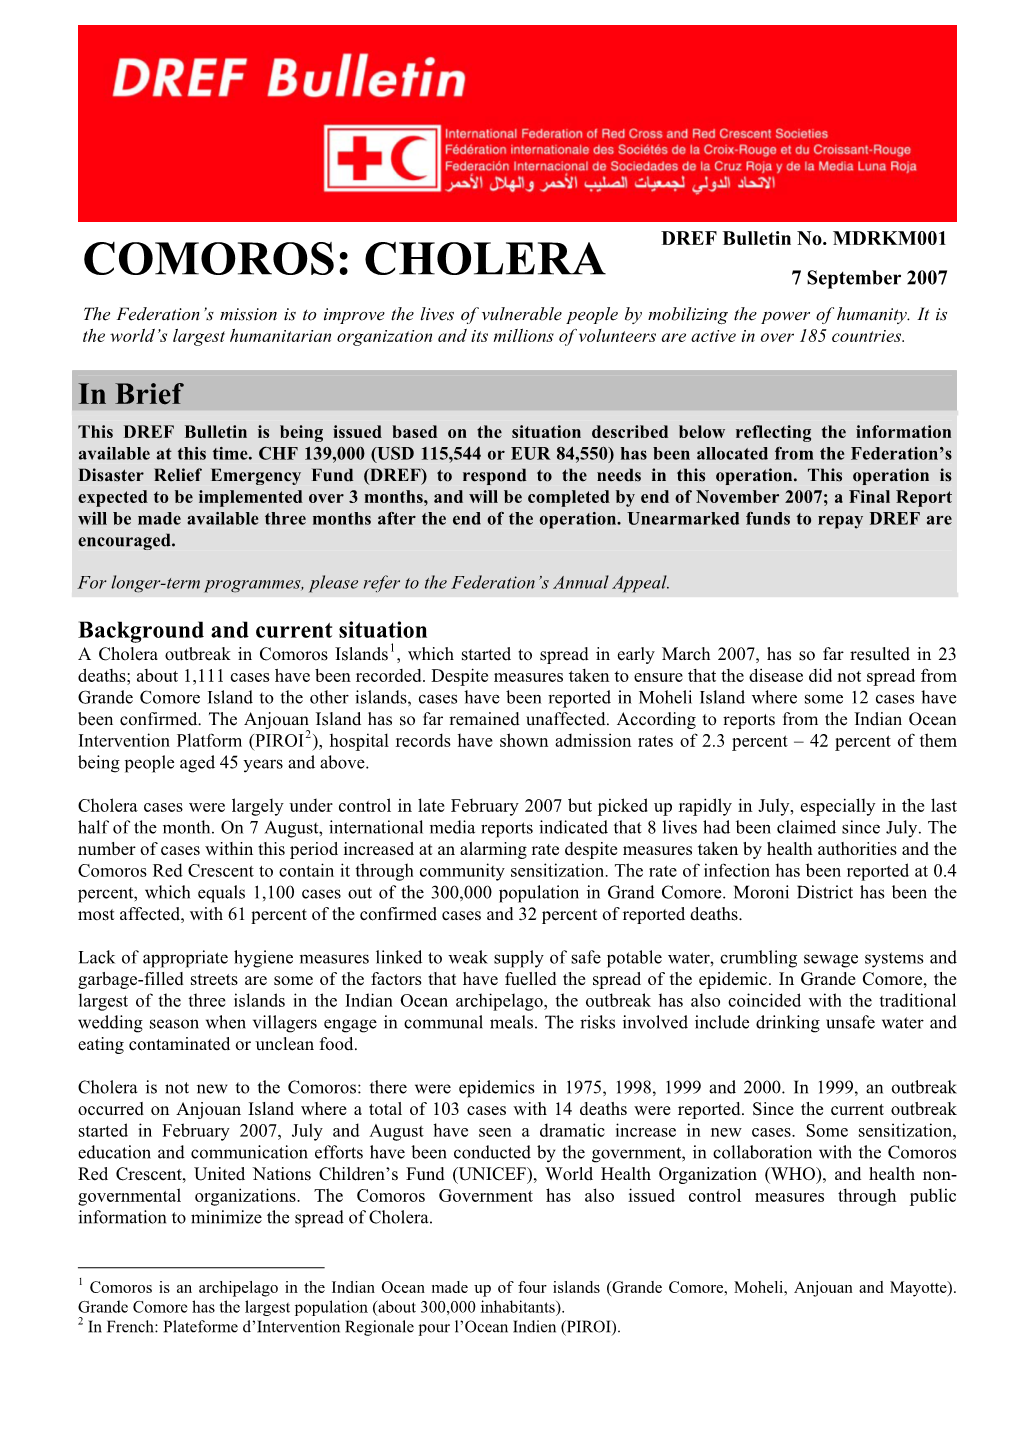 Comoros: Cholera; DREF Bulletin No. MDRKM001